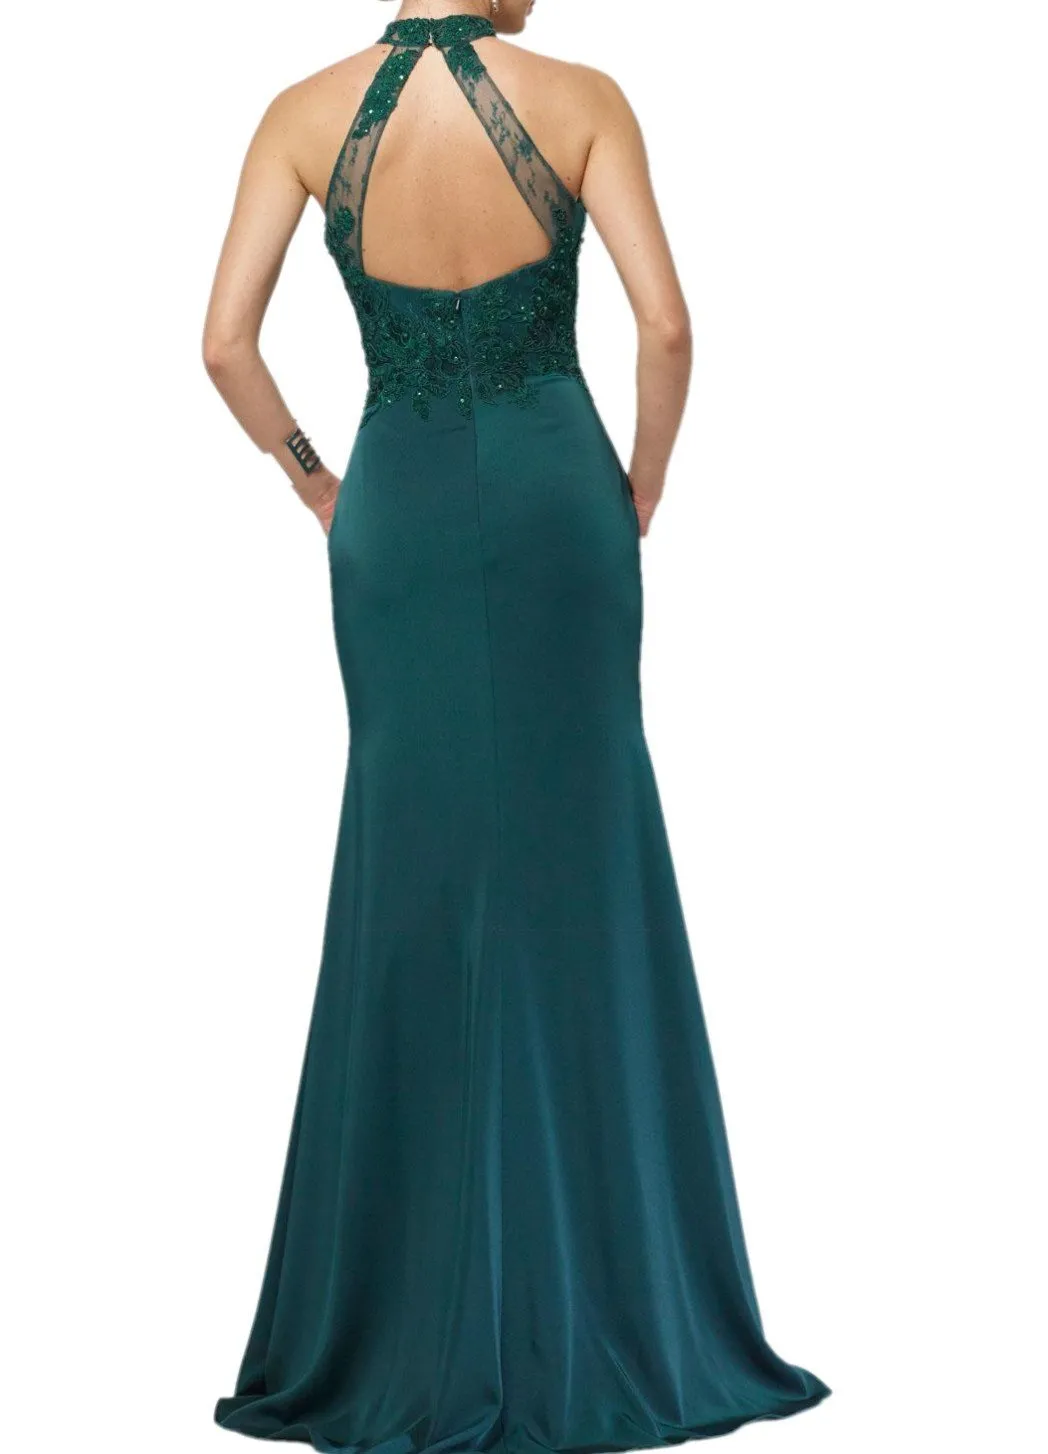 New High Quality Formal Evening Dresses Dark Green Elegance Halter Lace Sleeveless Backless Fishtail Prom Dresses HY142